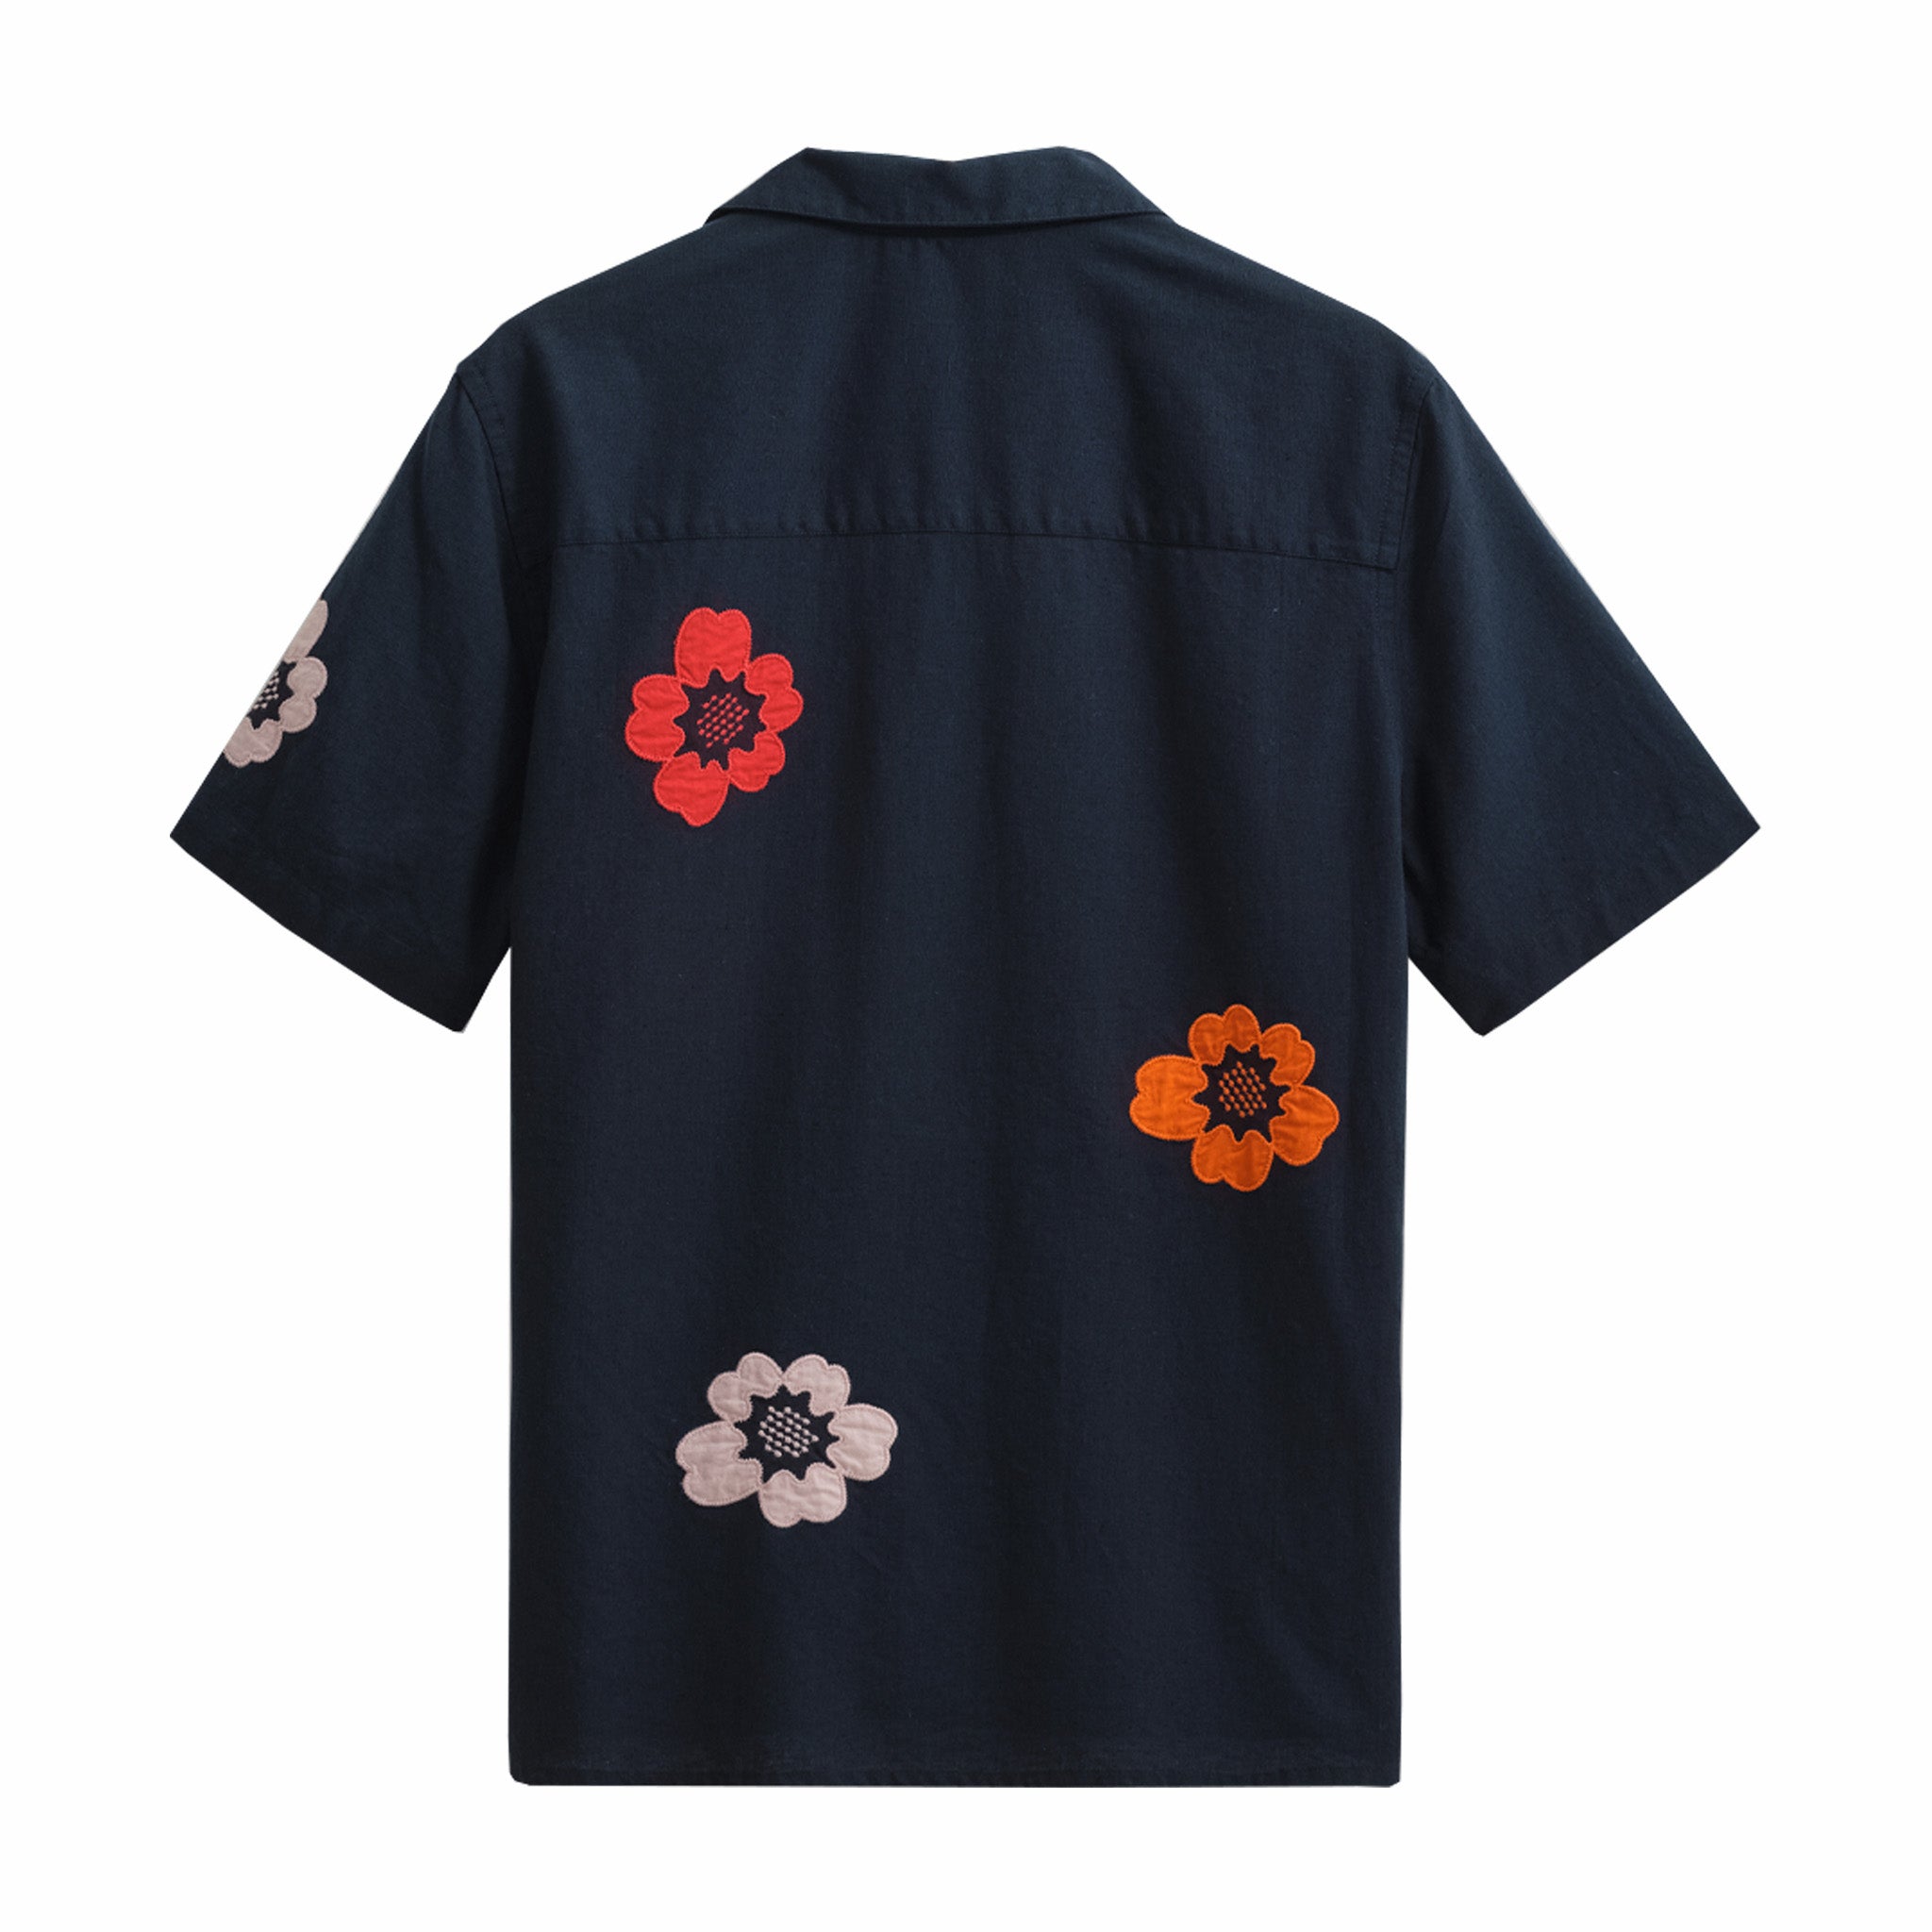 Wax London Didcot Short Sleeve Shirt - Applique Floral (Navy) - August Shop